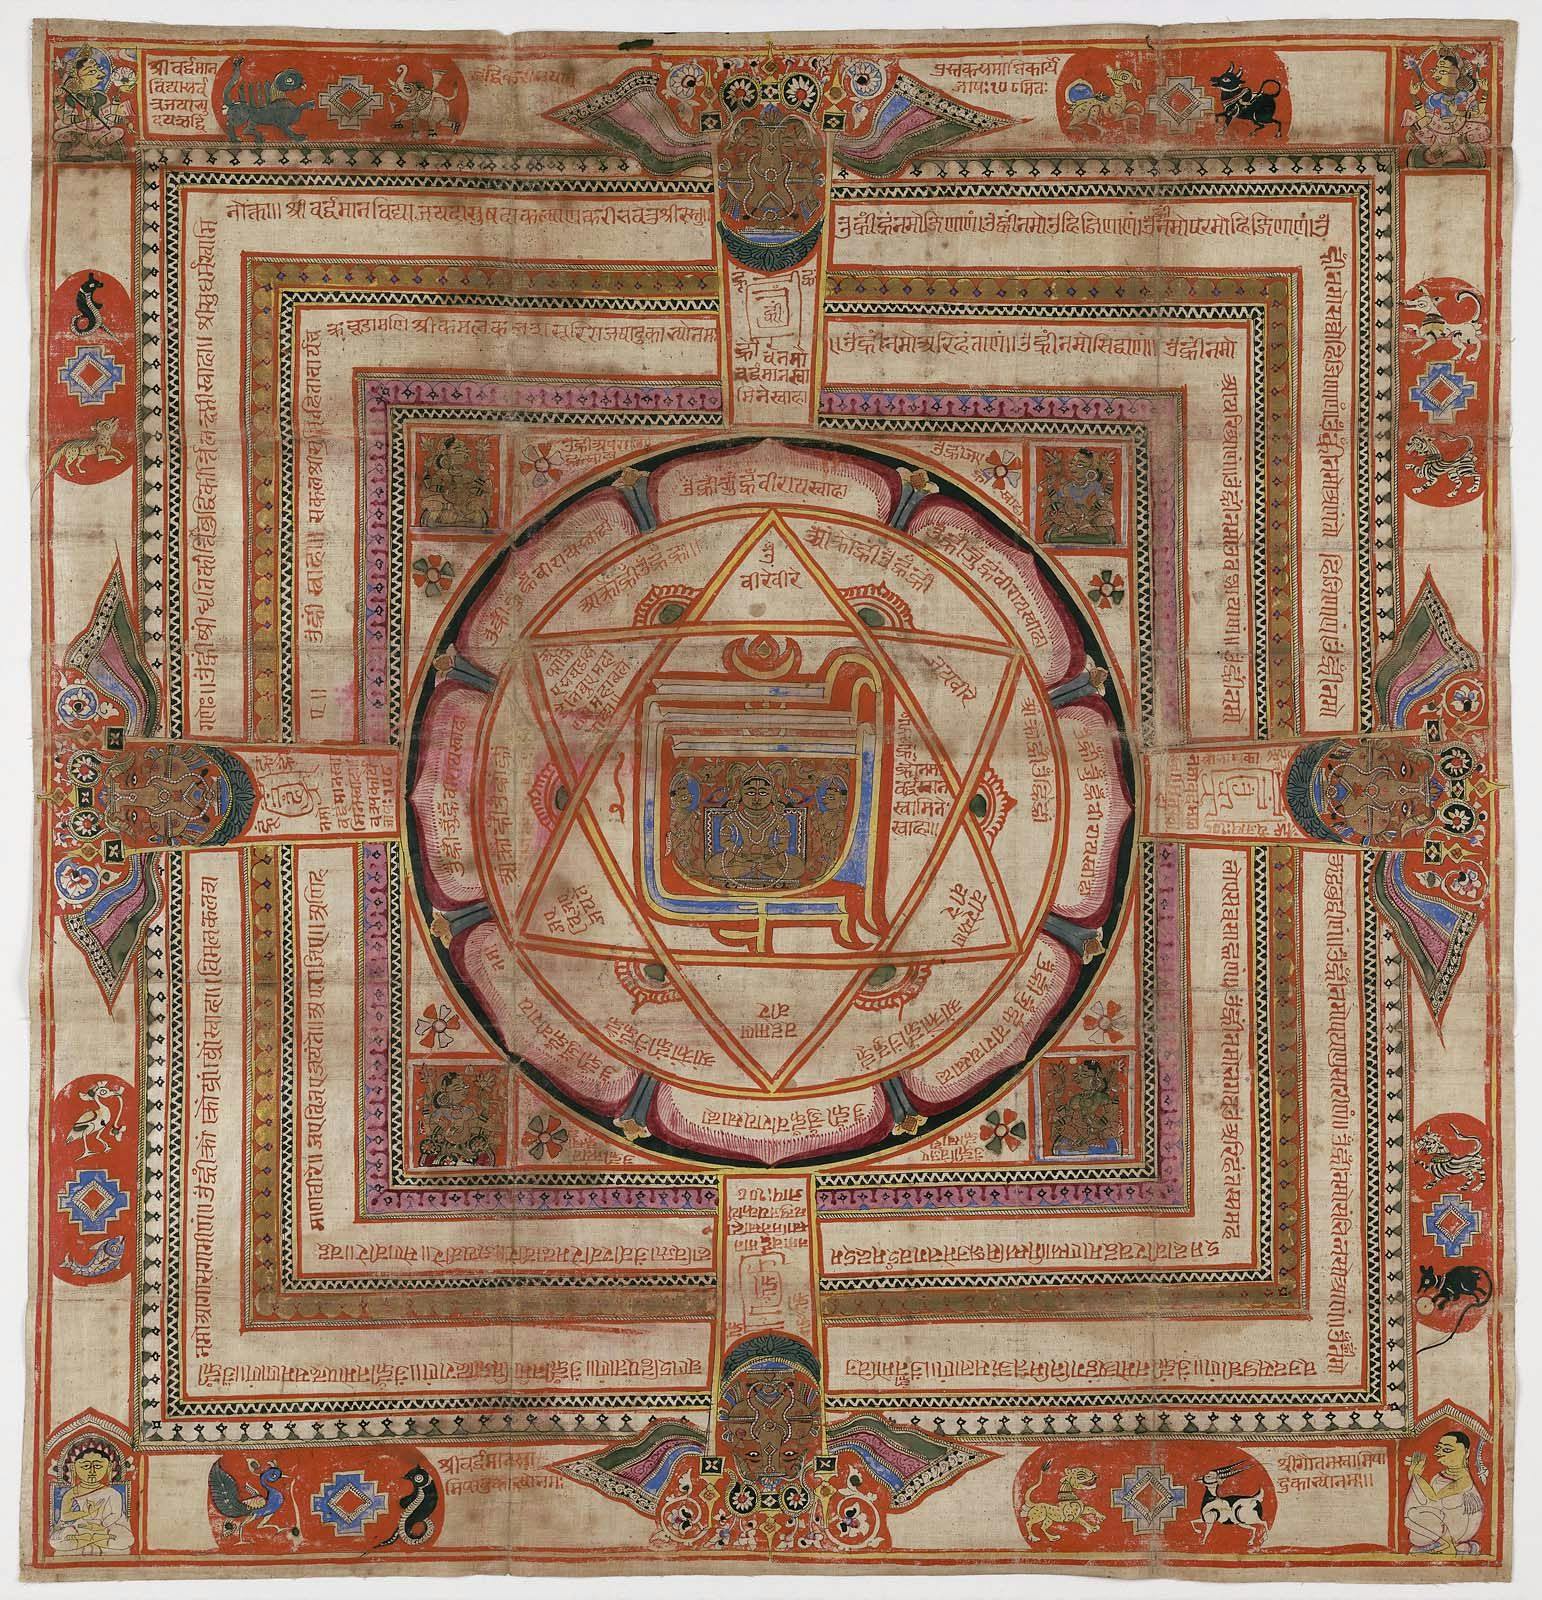 Jain mandala, 16th century CE